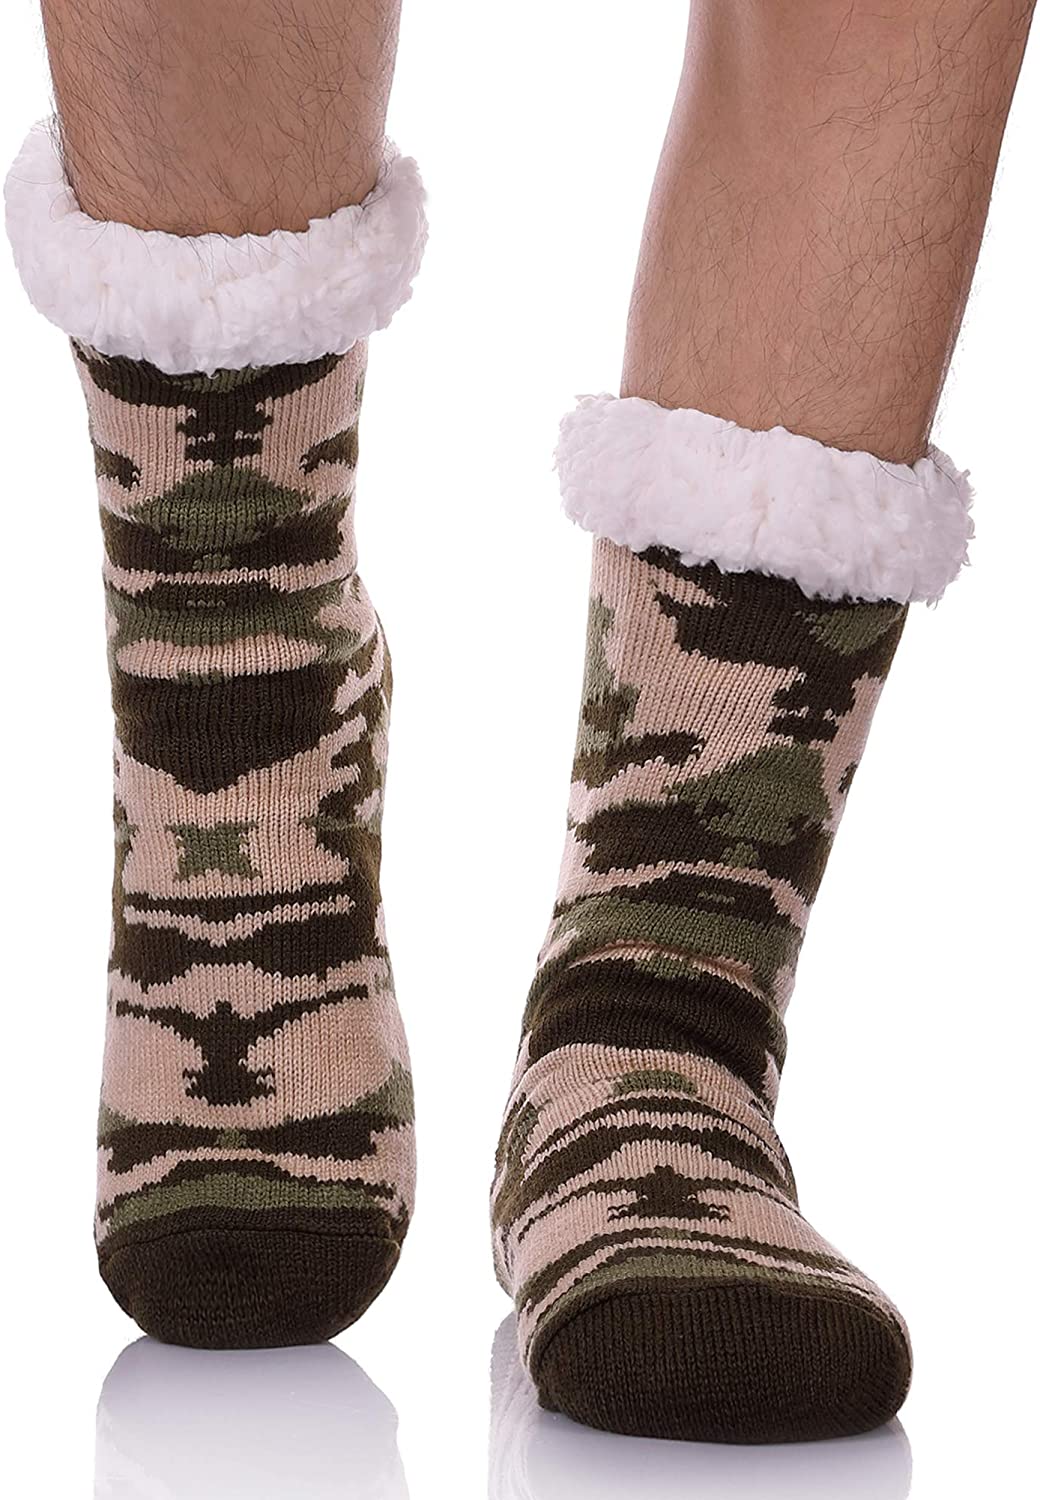 CHOWISH Mens Warm Fuzzy Slipper Socks Winter Cozy Thick Fleece Lined Non Slip Indoor Christmas Socks 